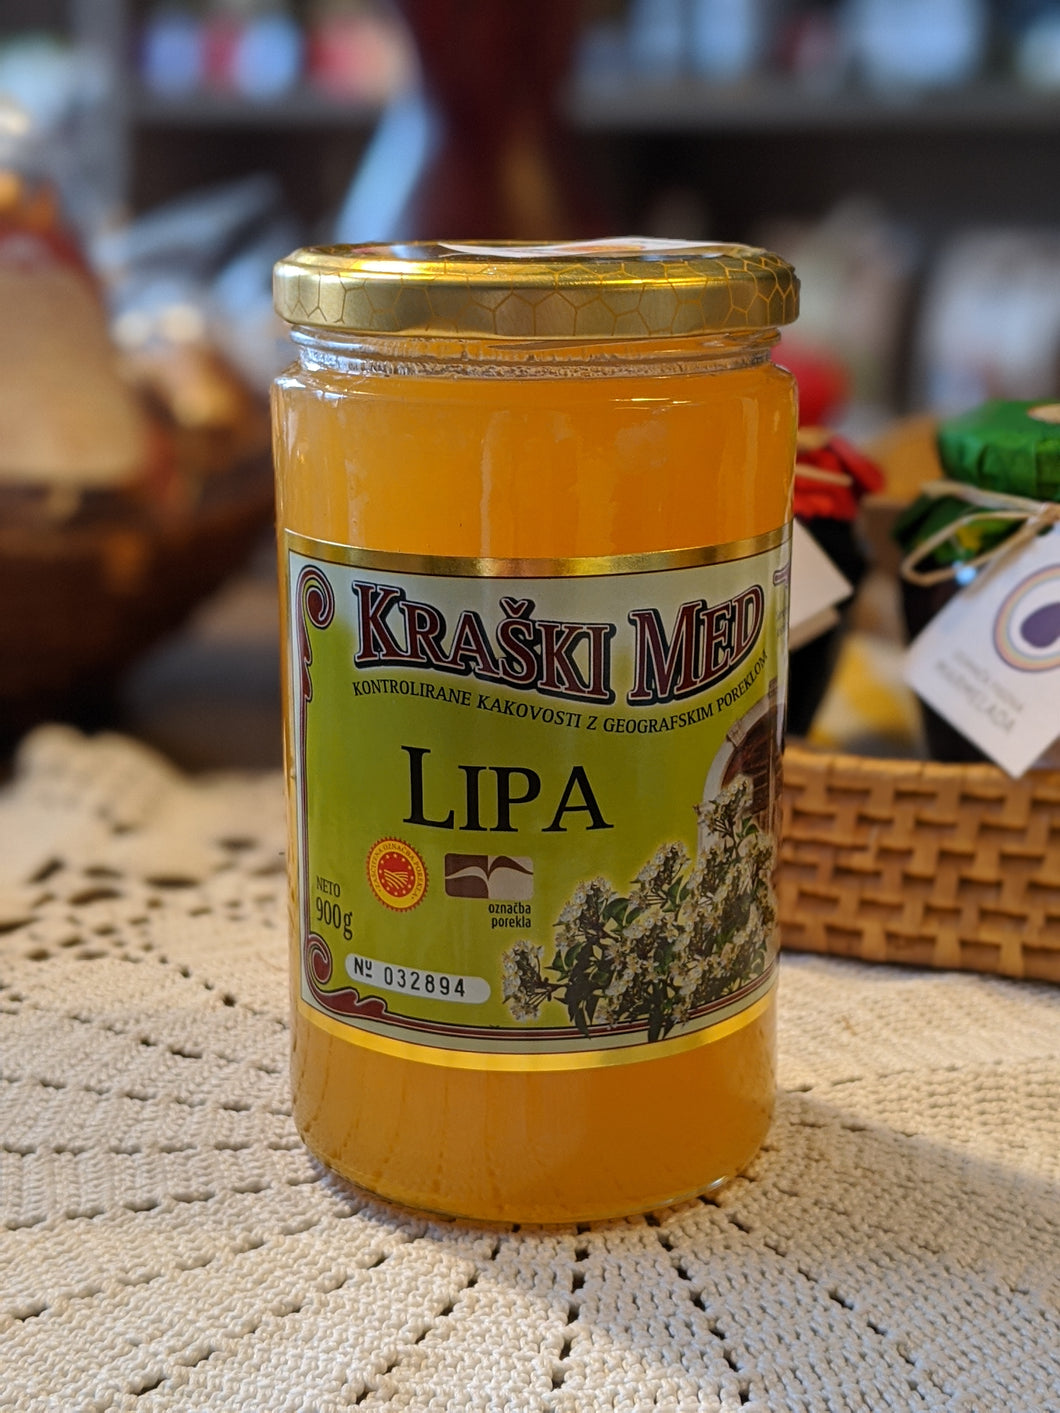 Karški honey Lipa 900g, 450g, 250g - protected designation of origin